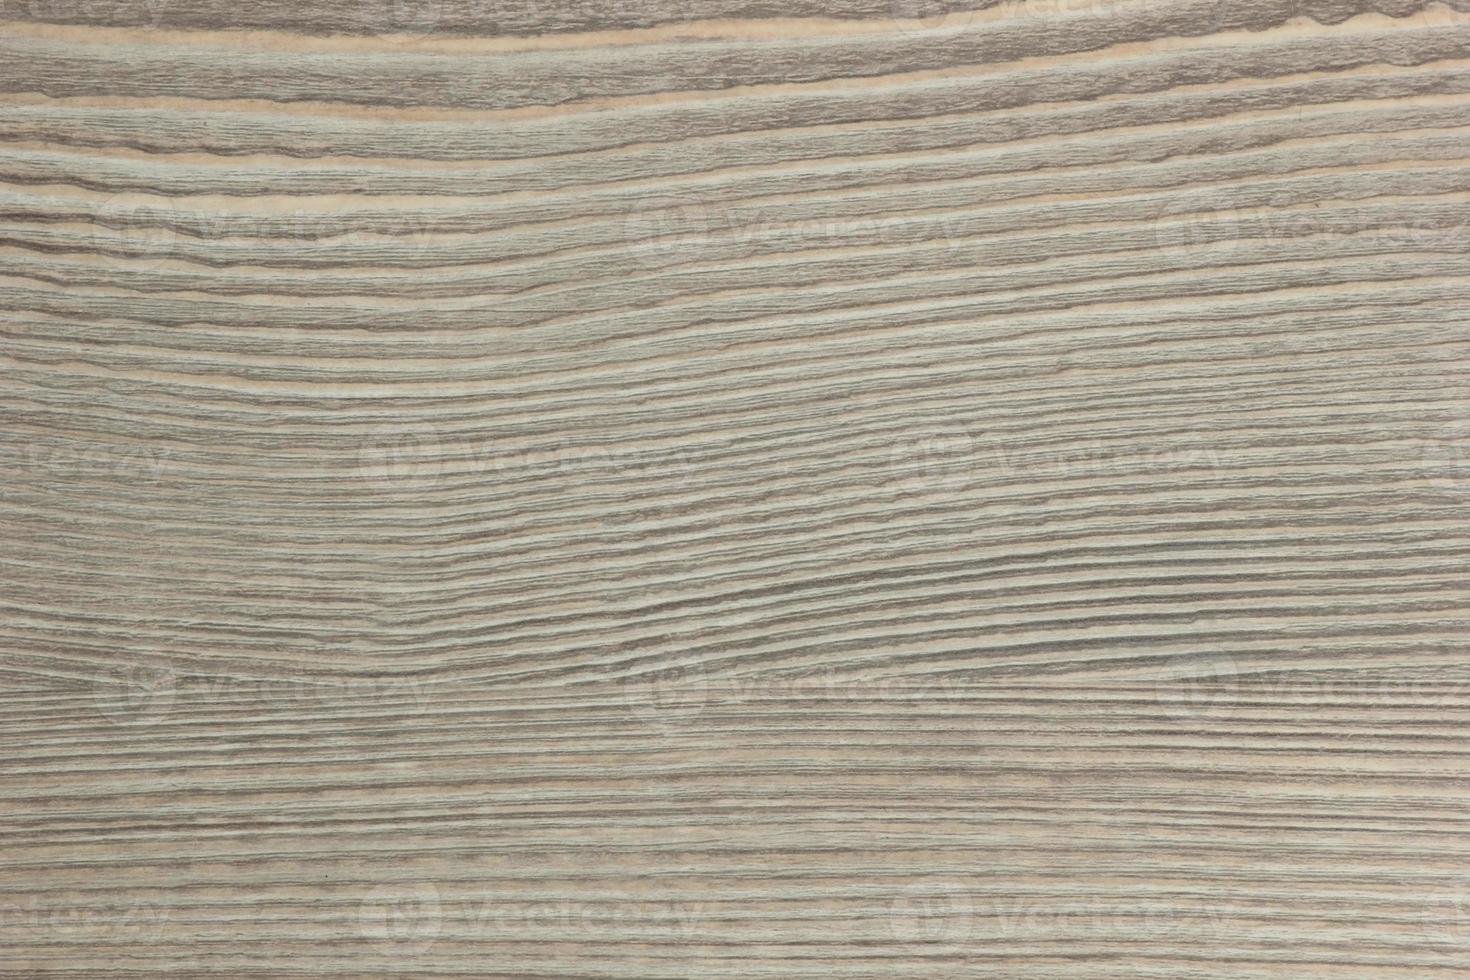 panel de madera gris para textura de fondo foto